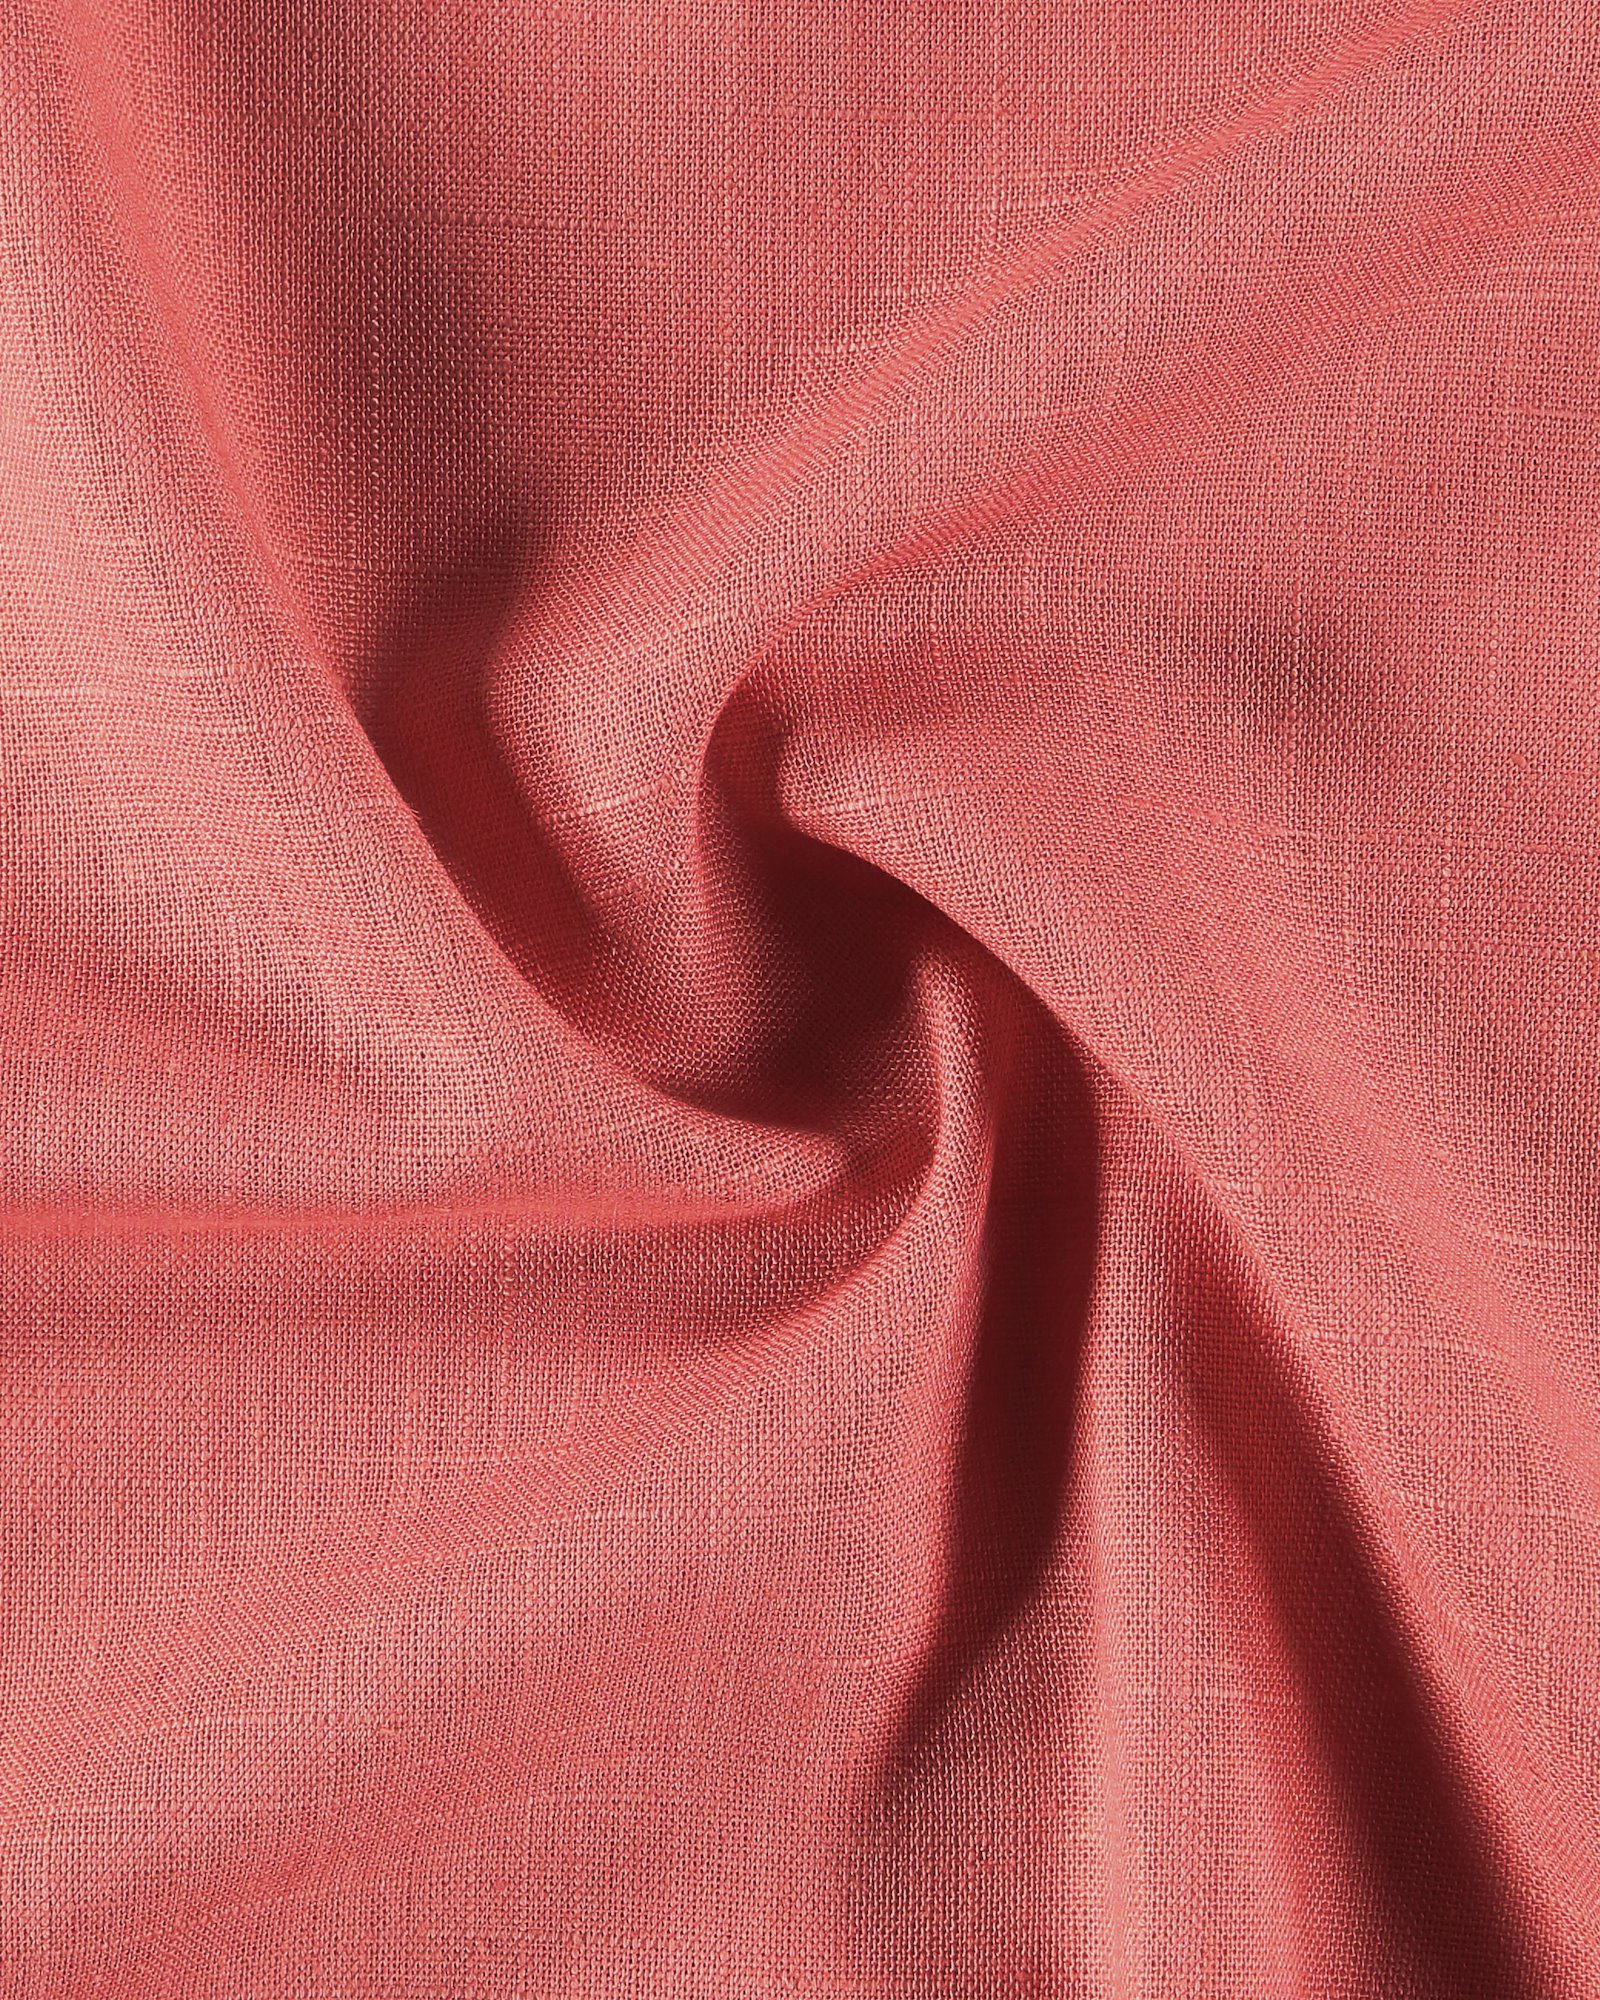 Coarse linen/viscose dark dusty pink 852440_pack